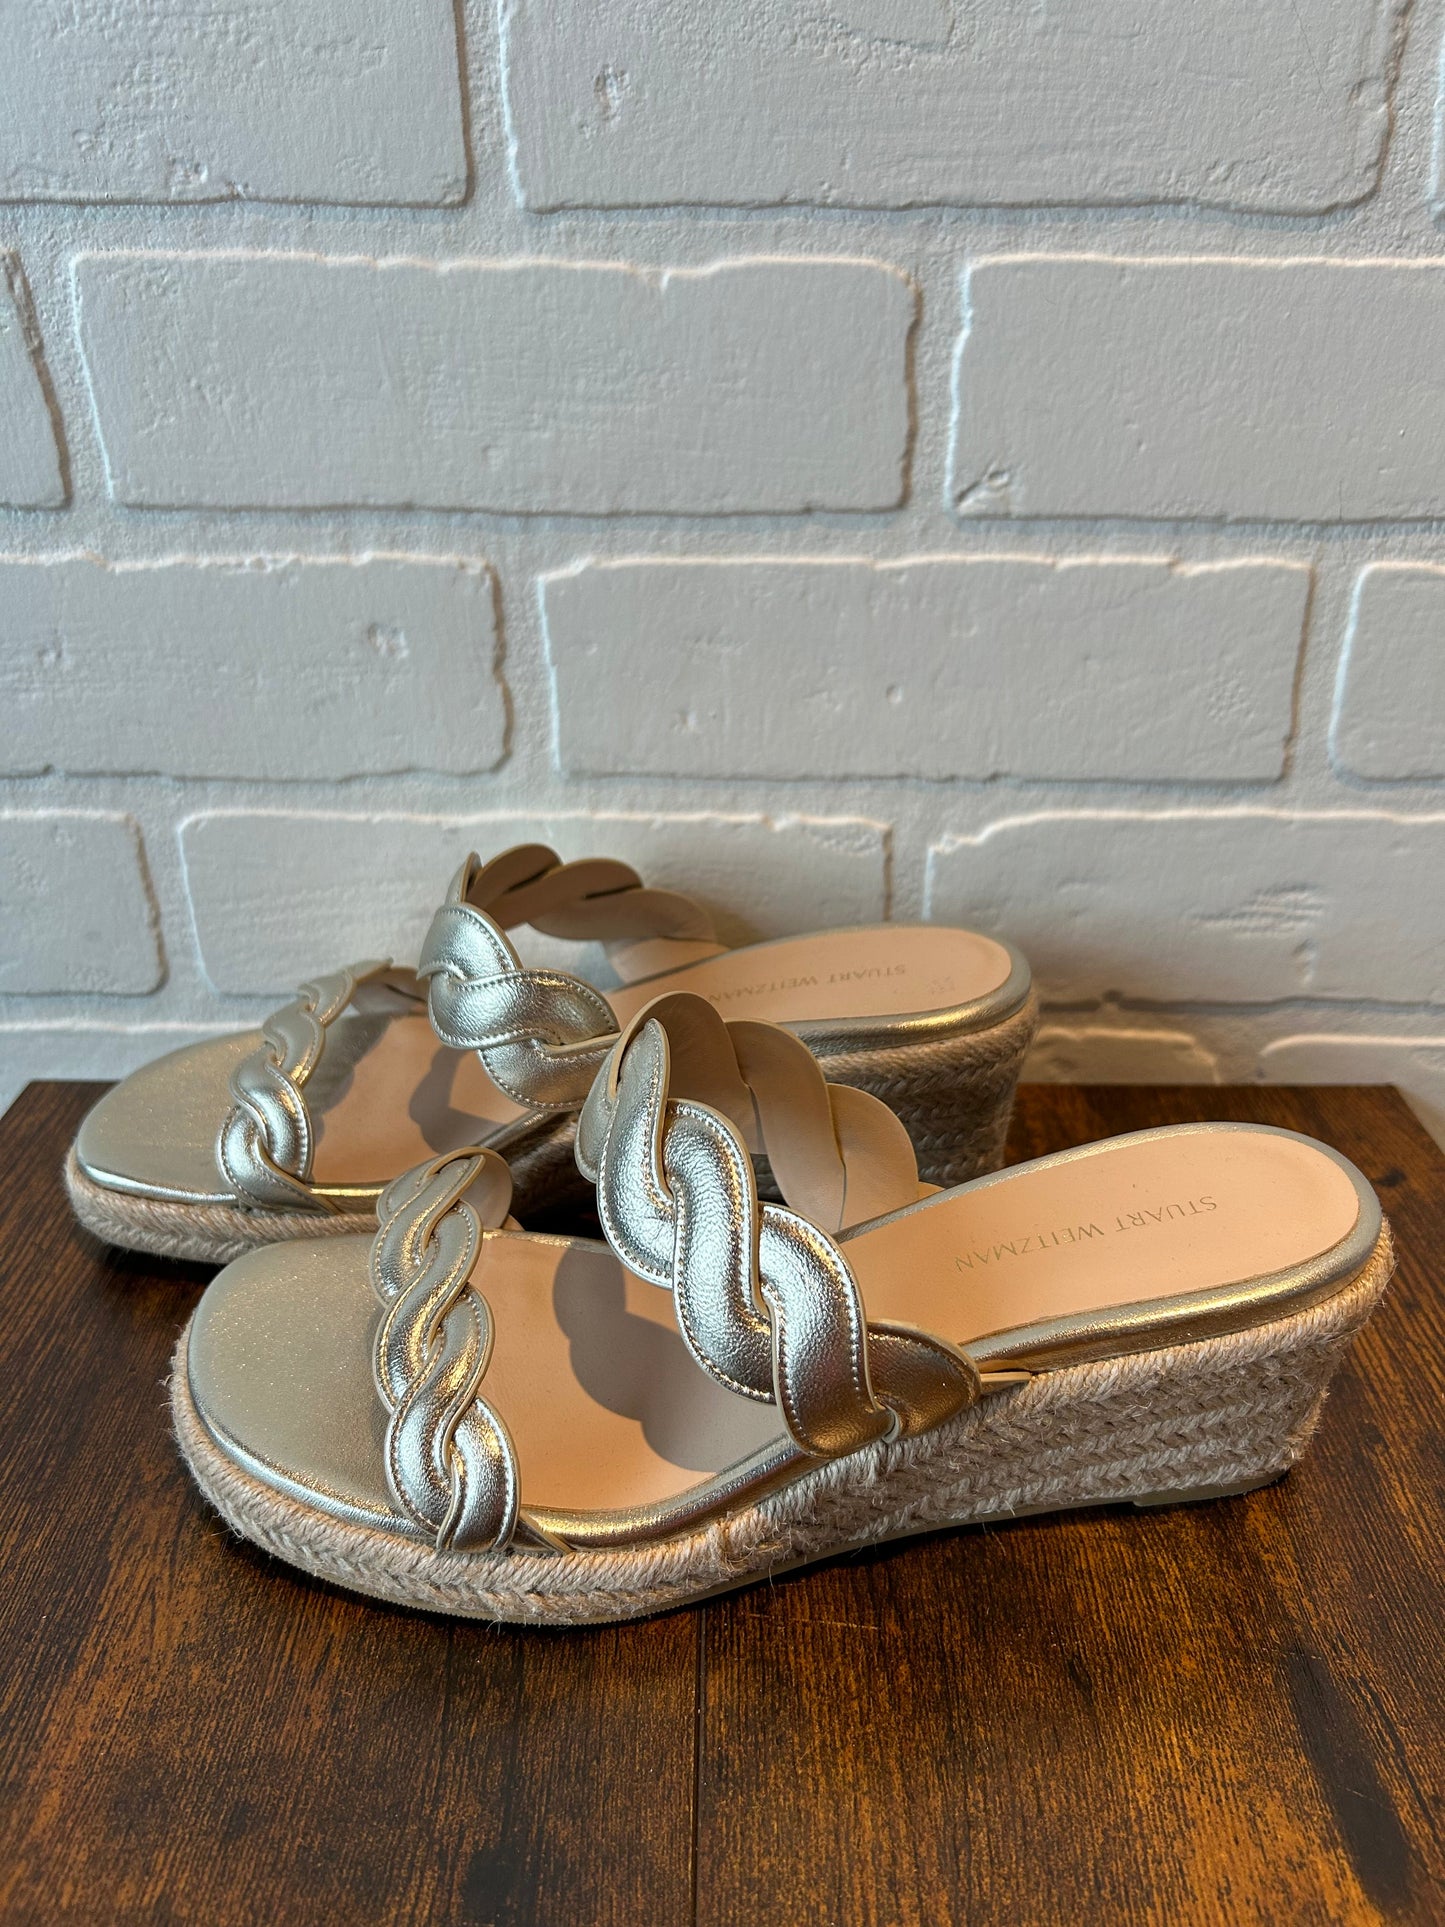 Sandals Flats By Stuart Weitzman  Size: 6